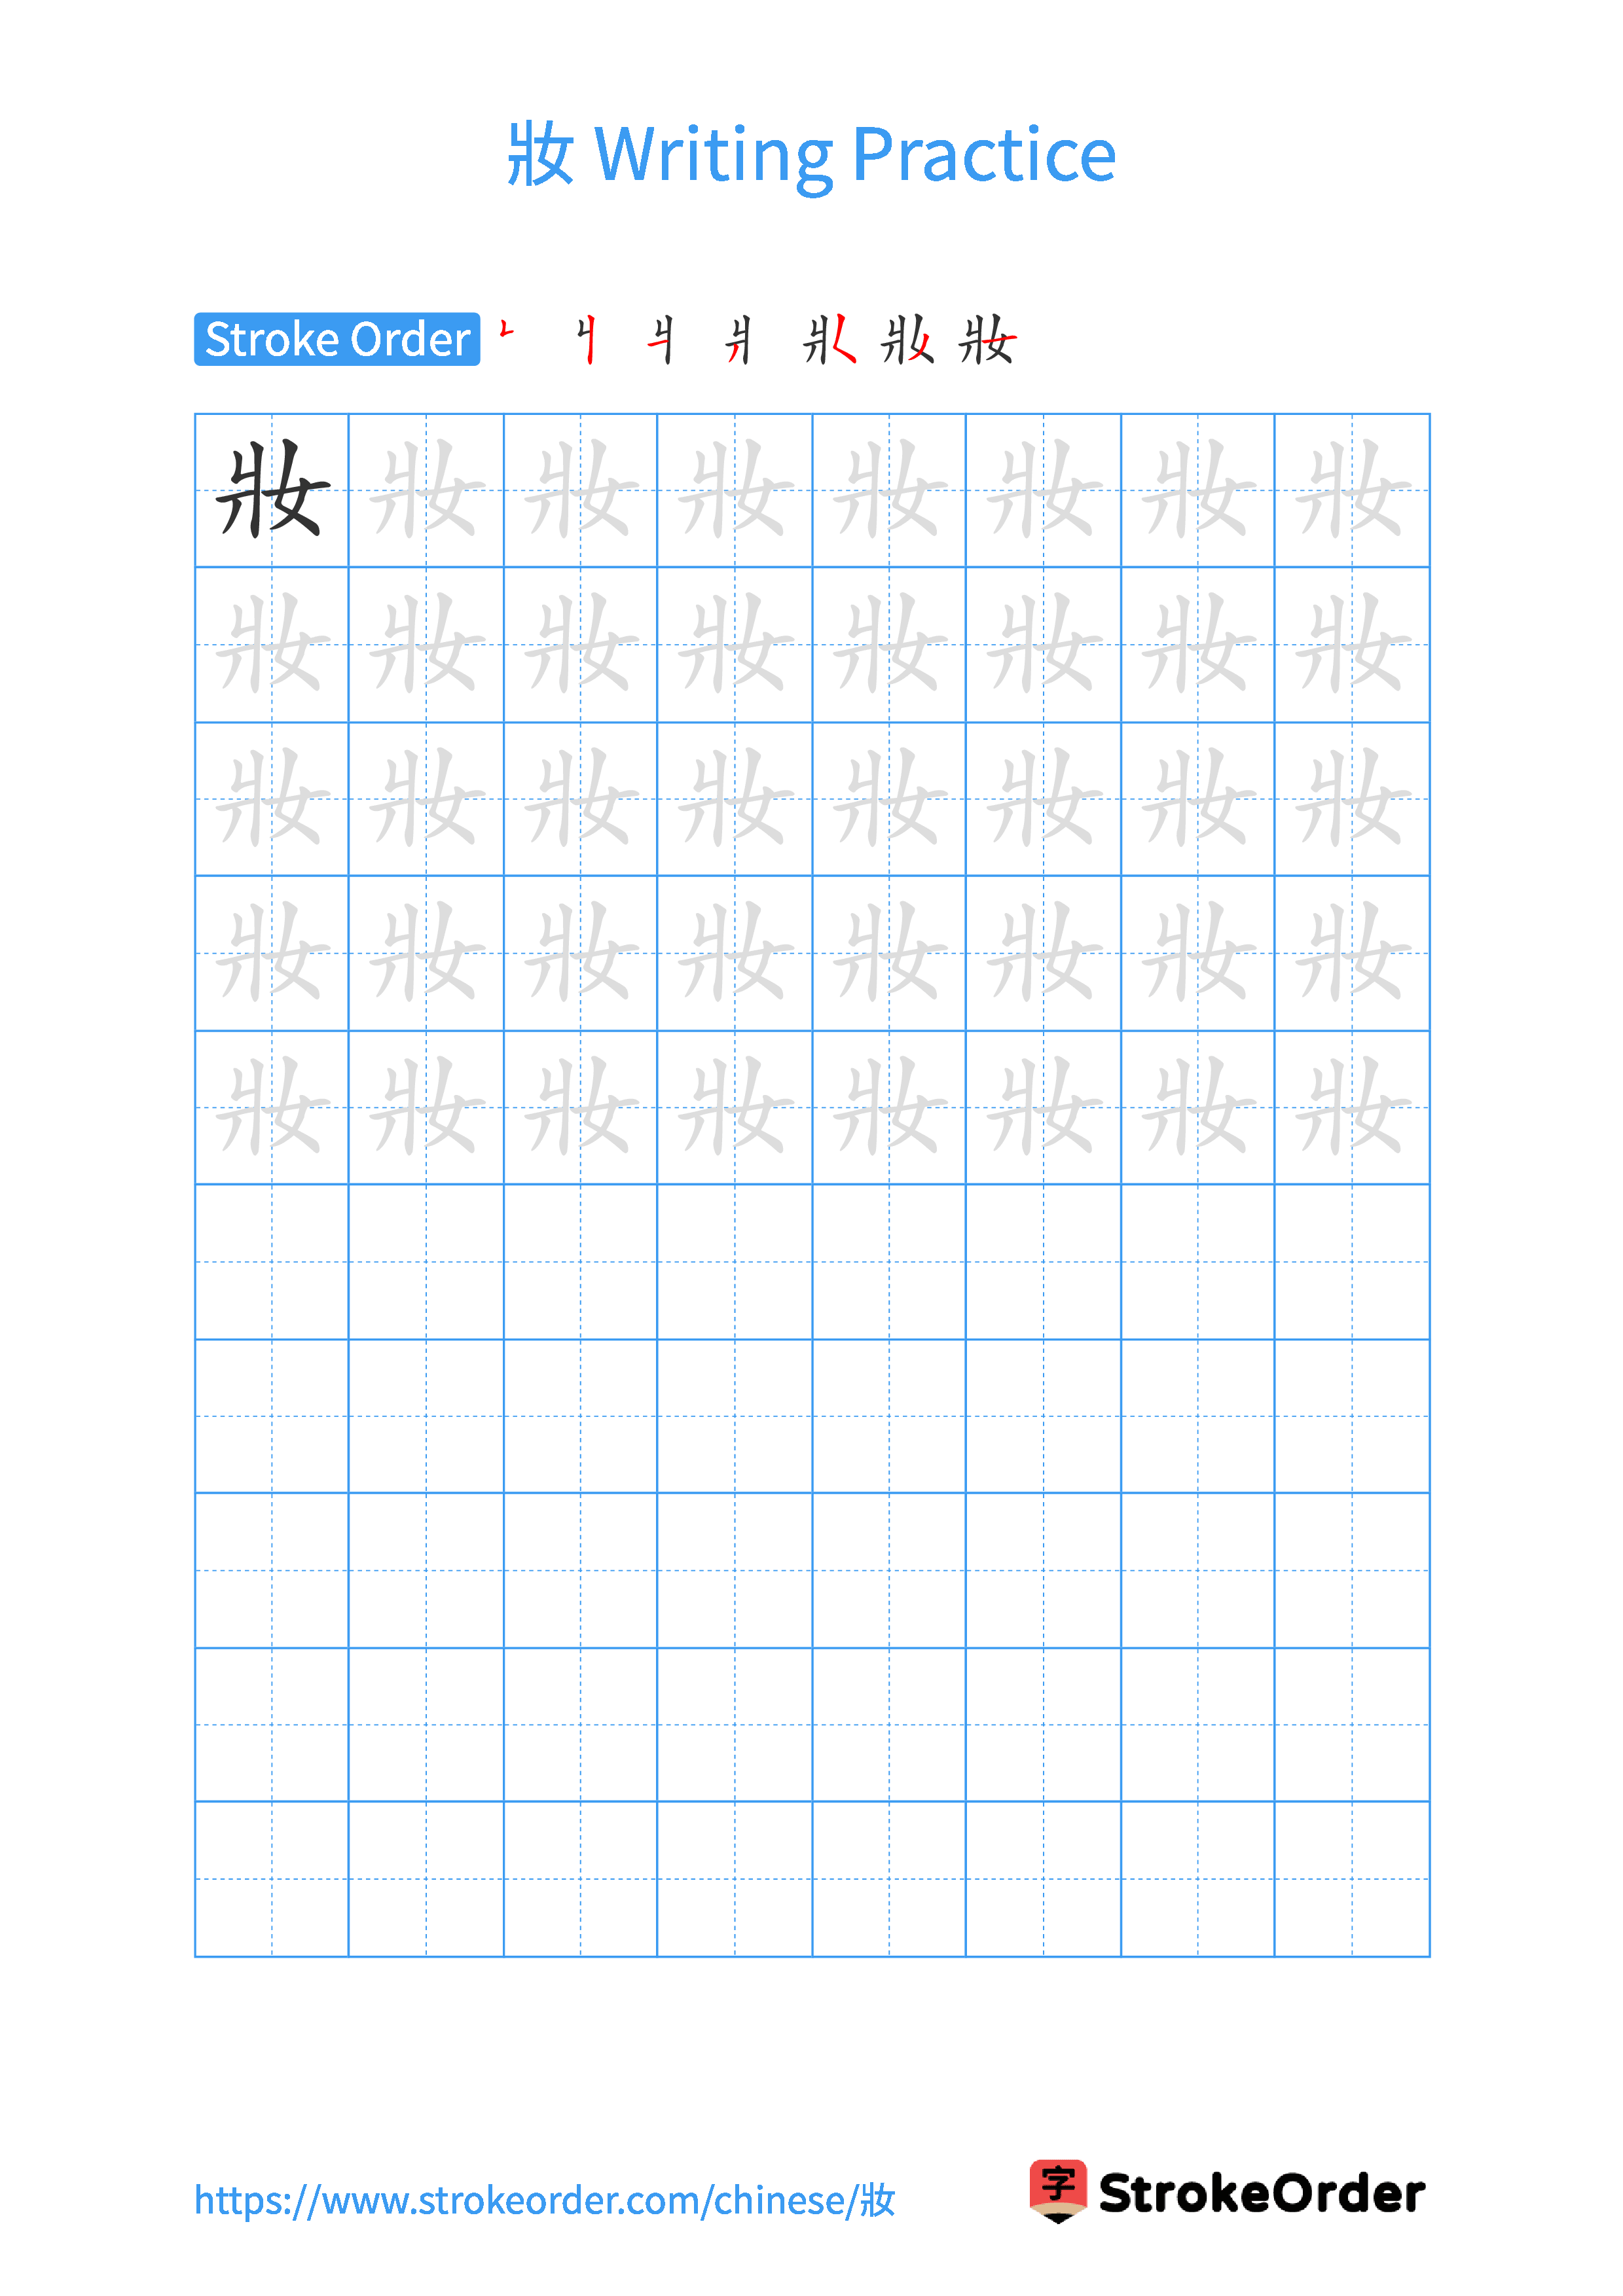 Printable Handwriting Practice Worksheet of the Chinese character 妝 in Portrait Orientation (Tian Zi Ge)